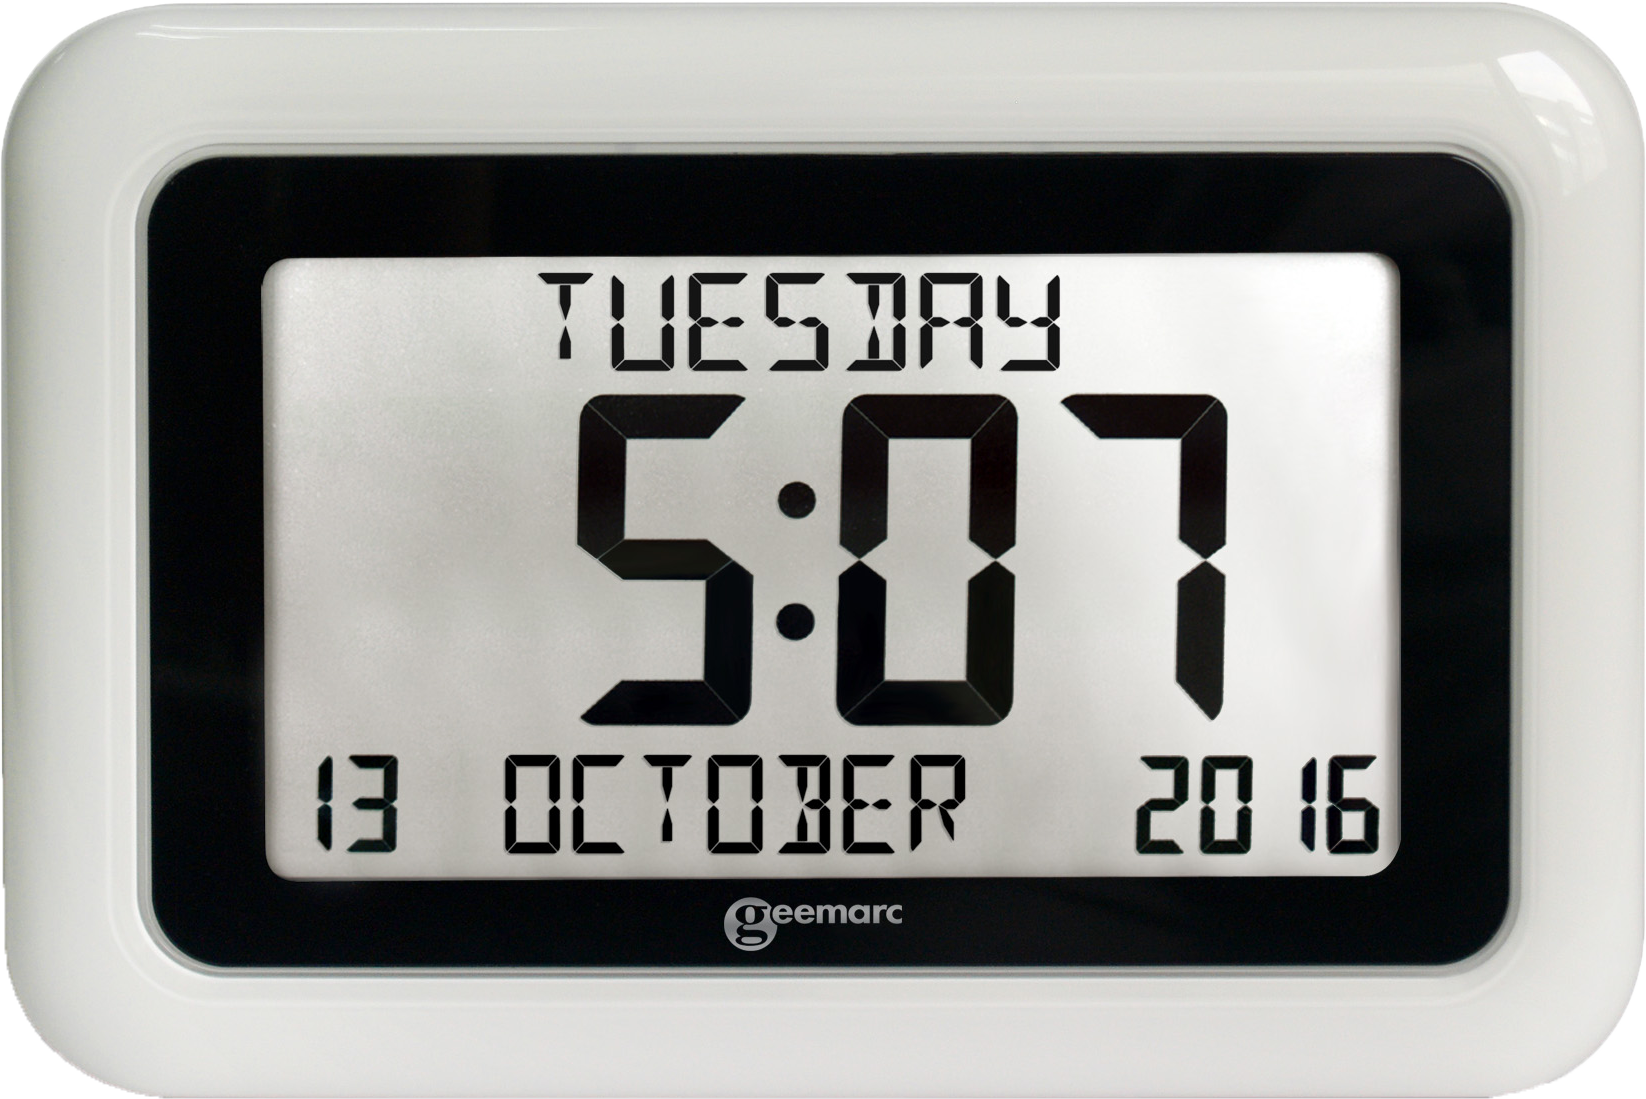 Radio controlled day clock - VAT free